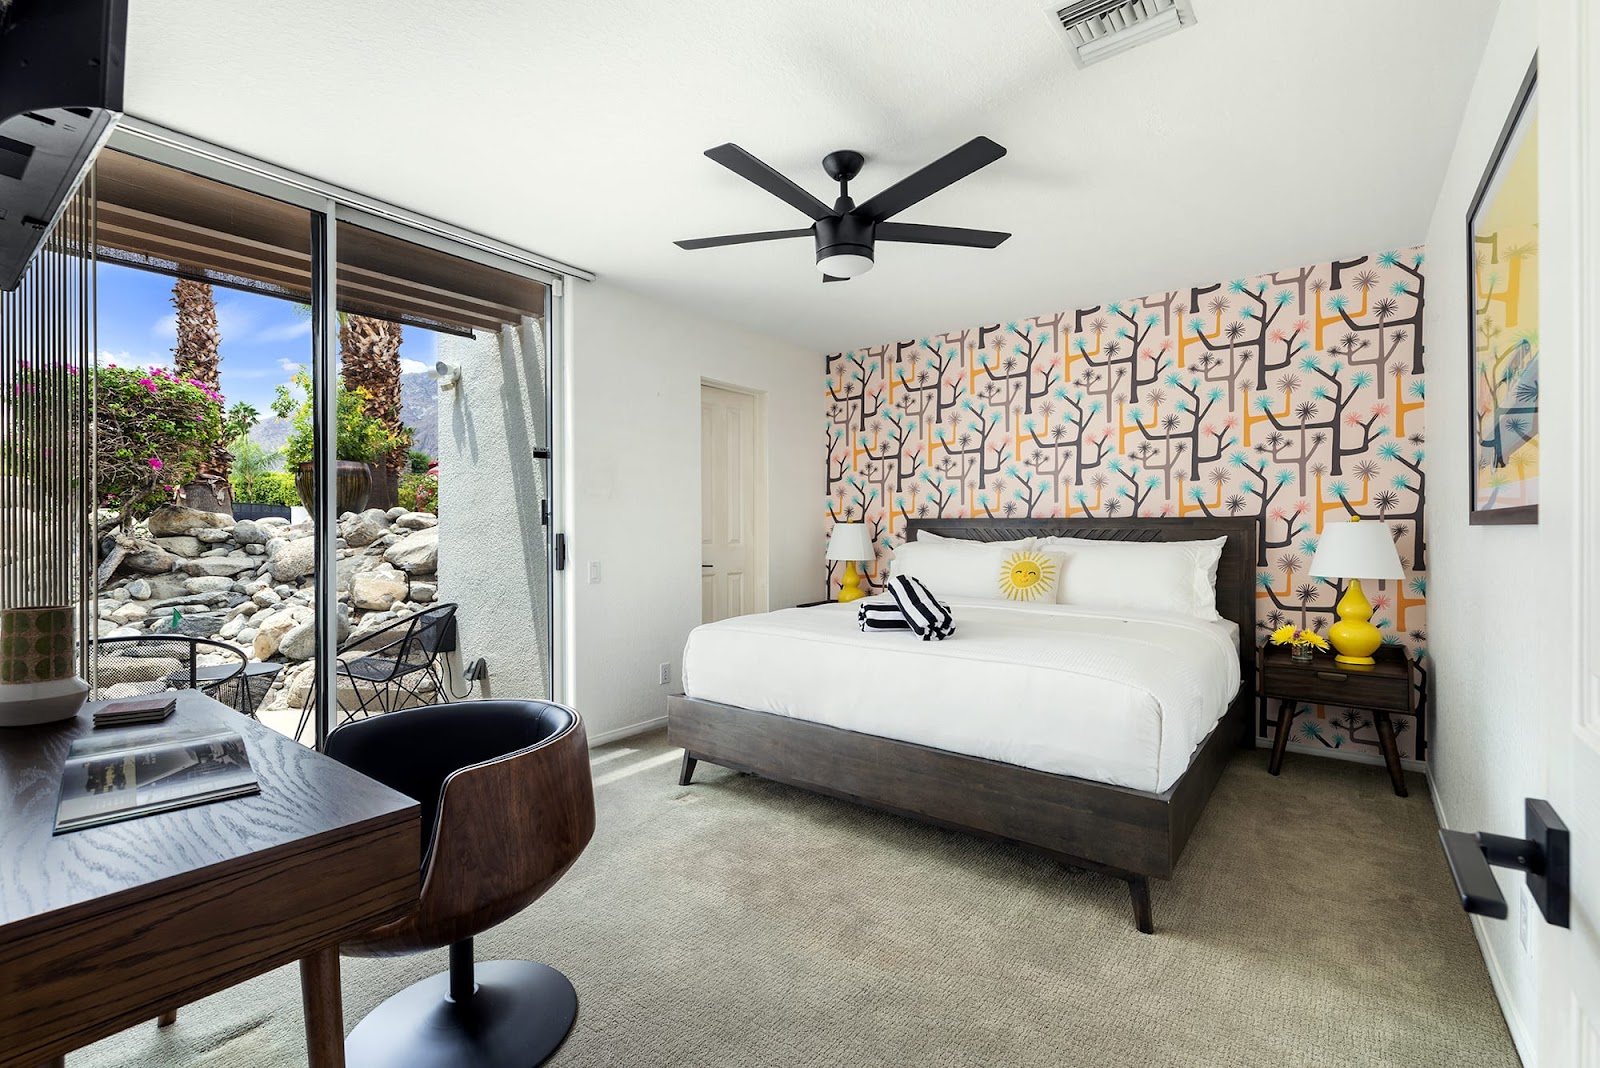 Sunsplash, a mid-century modern vacation rental in Palm Springs